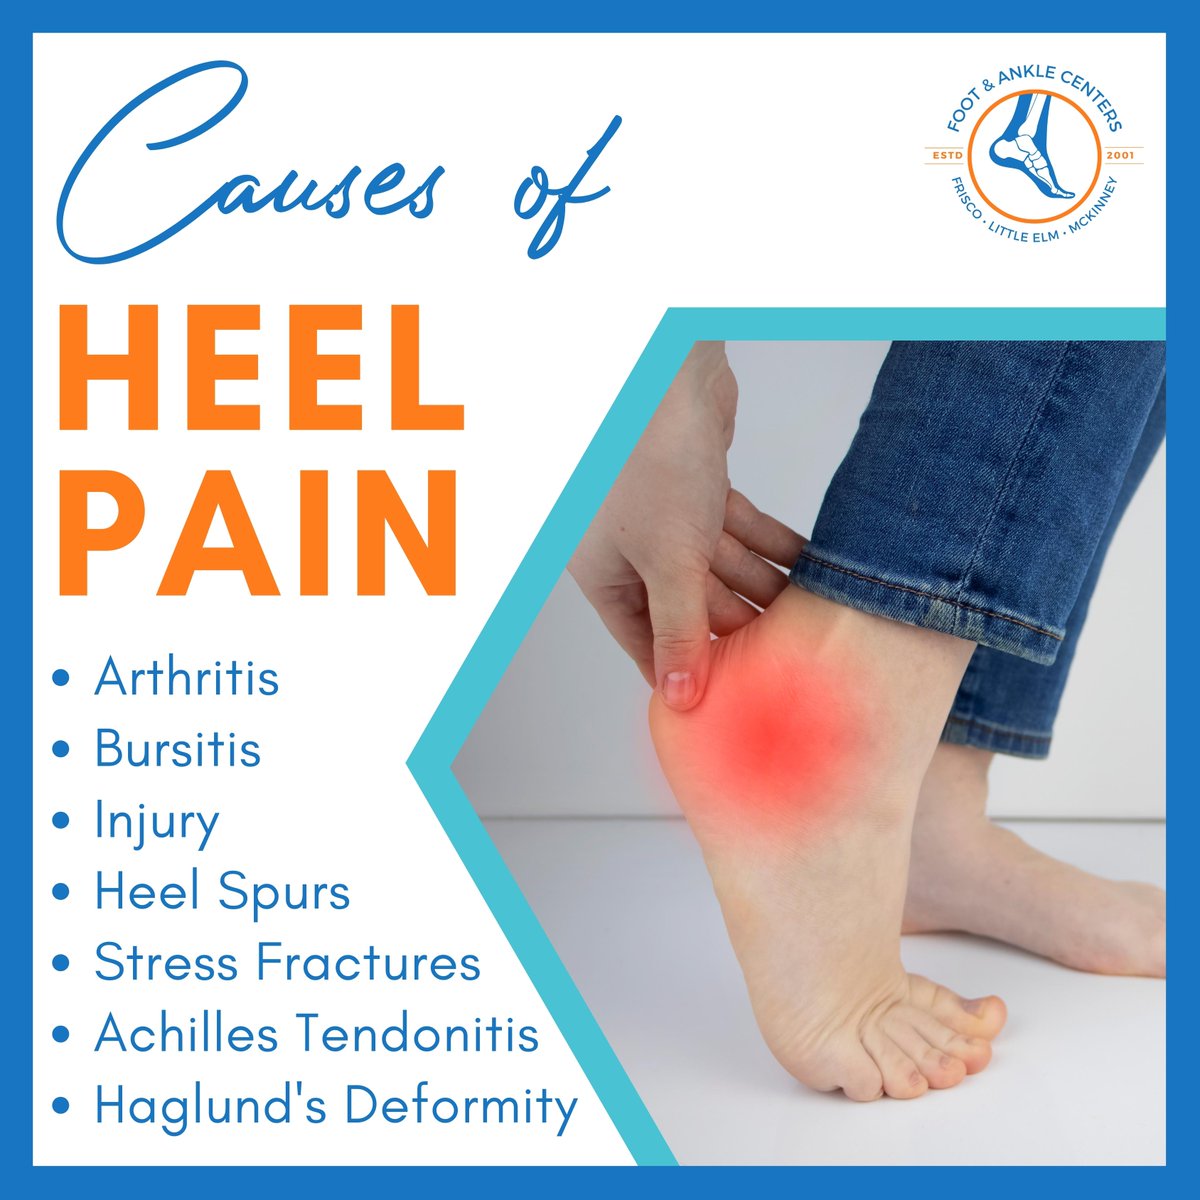 Heel pain can be caused by an underlying problem, such as:
Achilles tendonitis
Arthritis
Bursitis
Heel spurs
Stress fractures
Injury
Haglund's deformity

#heelpain #heelpainsymptoms #foothealth #footcare #footandankle #frisco #texas #mckinney #littleelm #podiatrist